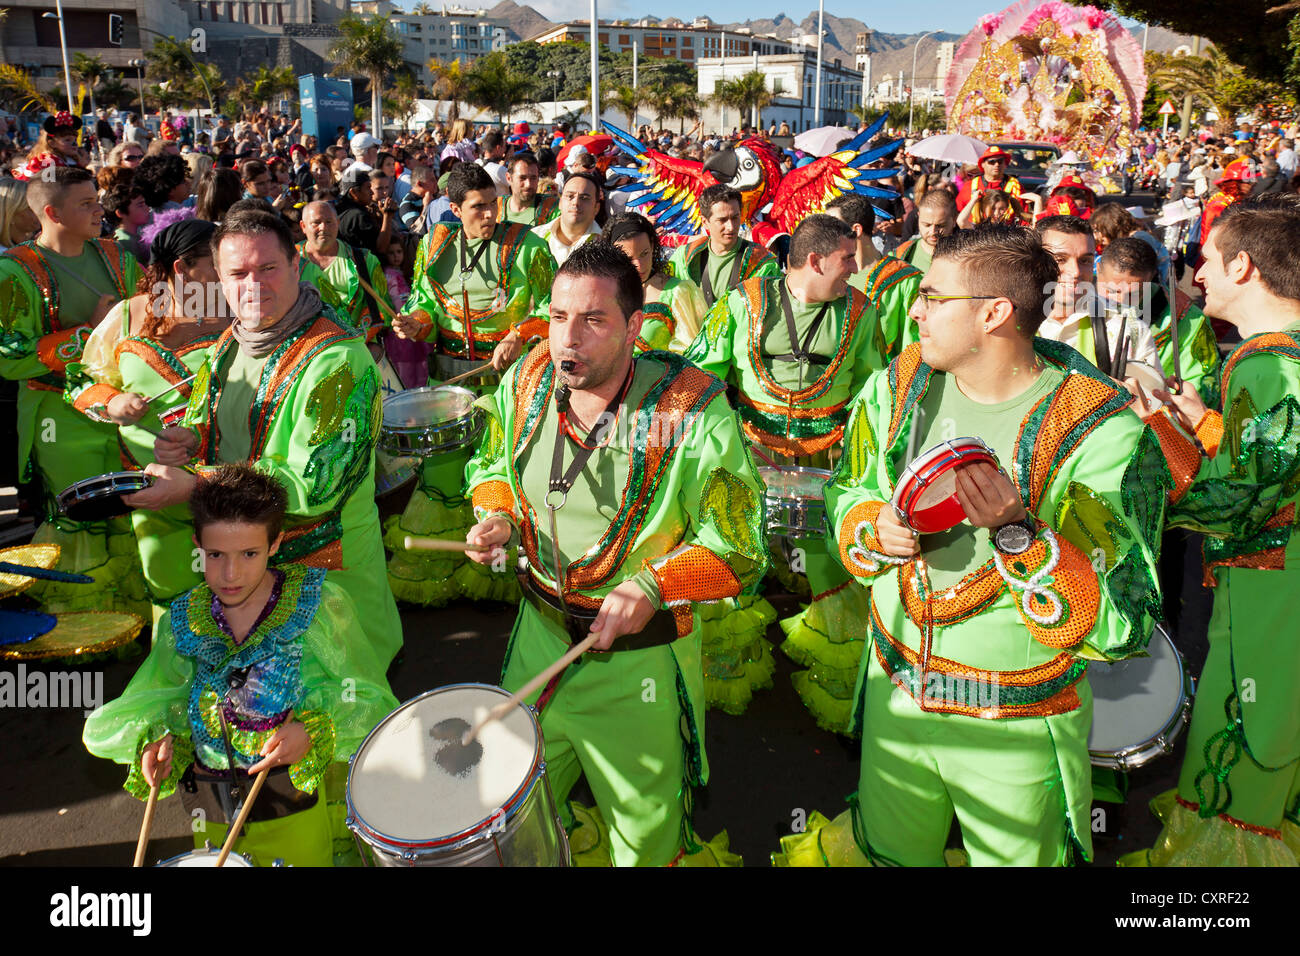 Carnaval de Santa Cruz, la capitale de Tenerife, Canaries, Espagne, Europe Banque D'Images